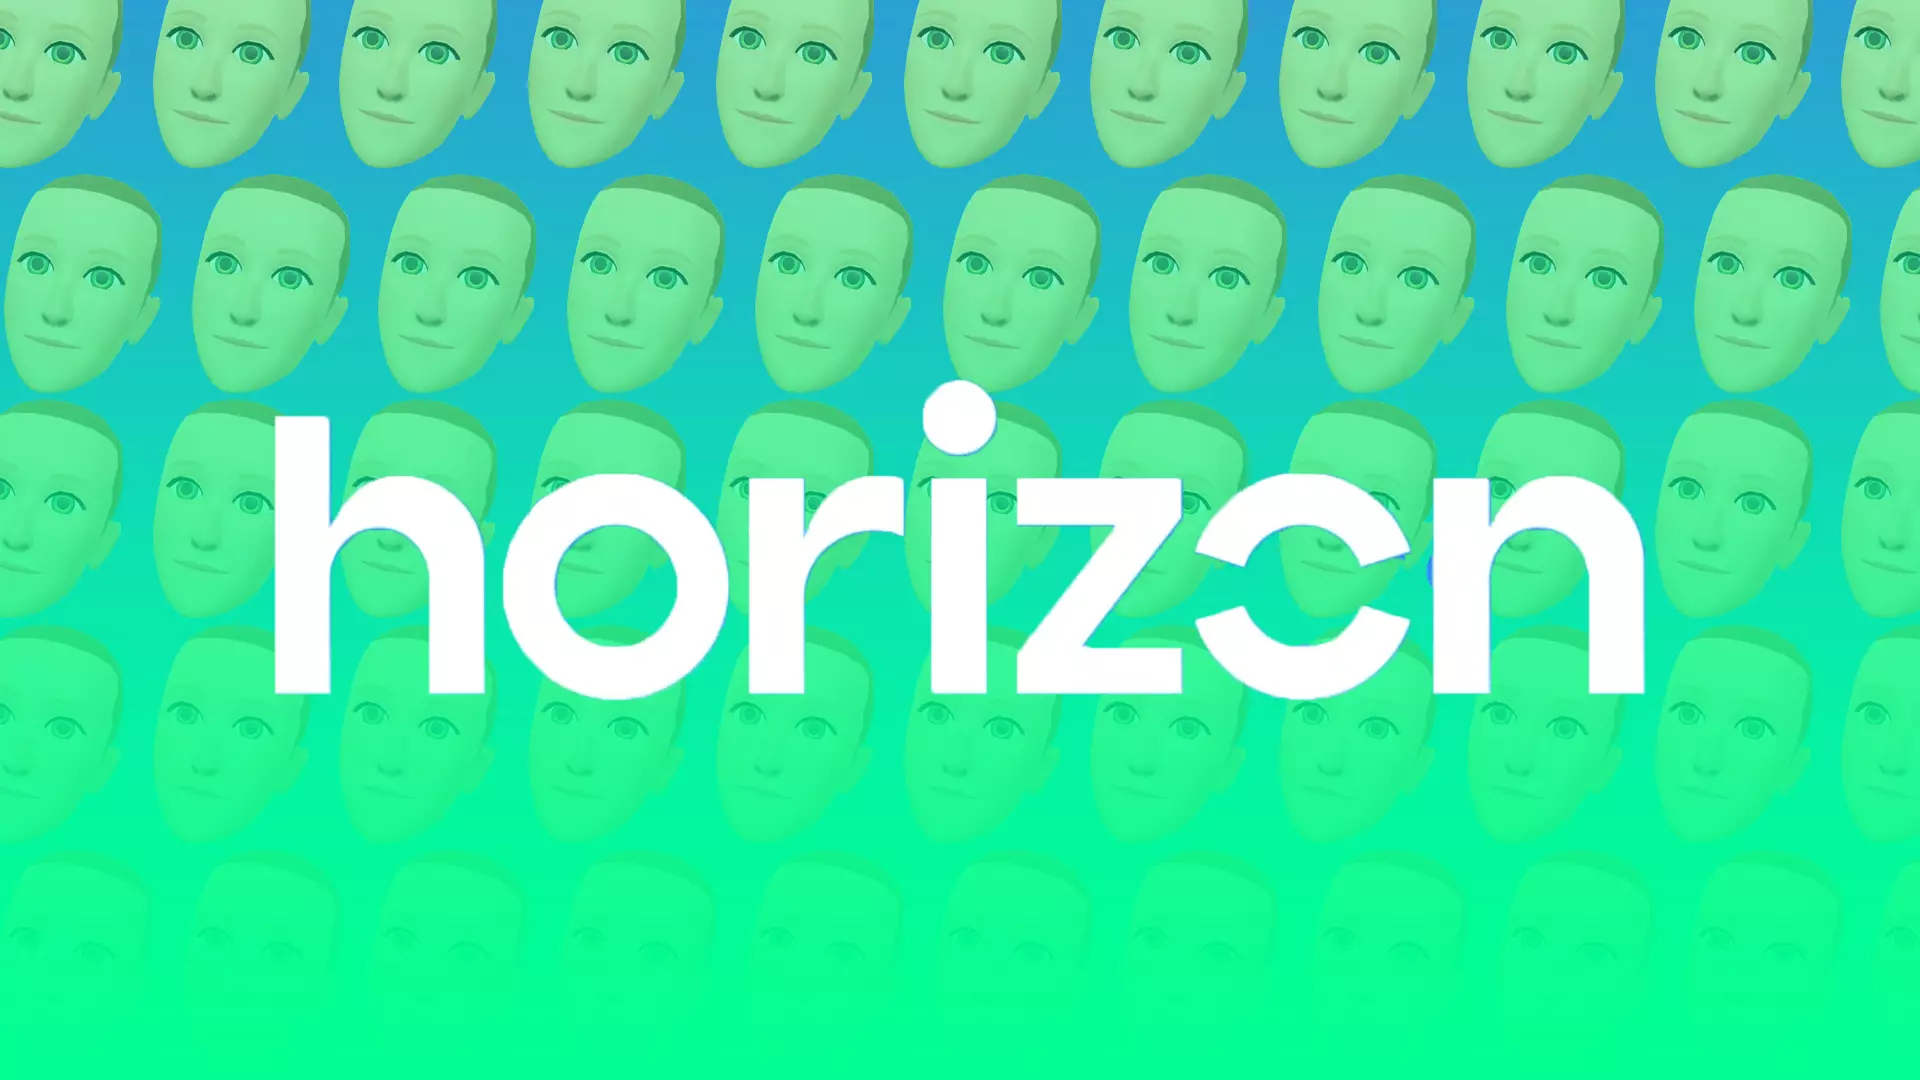 Horizon avatars await a major update after Mark Zuckerberg's avatar was mocked